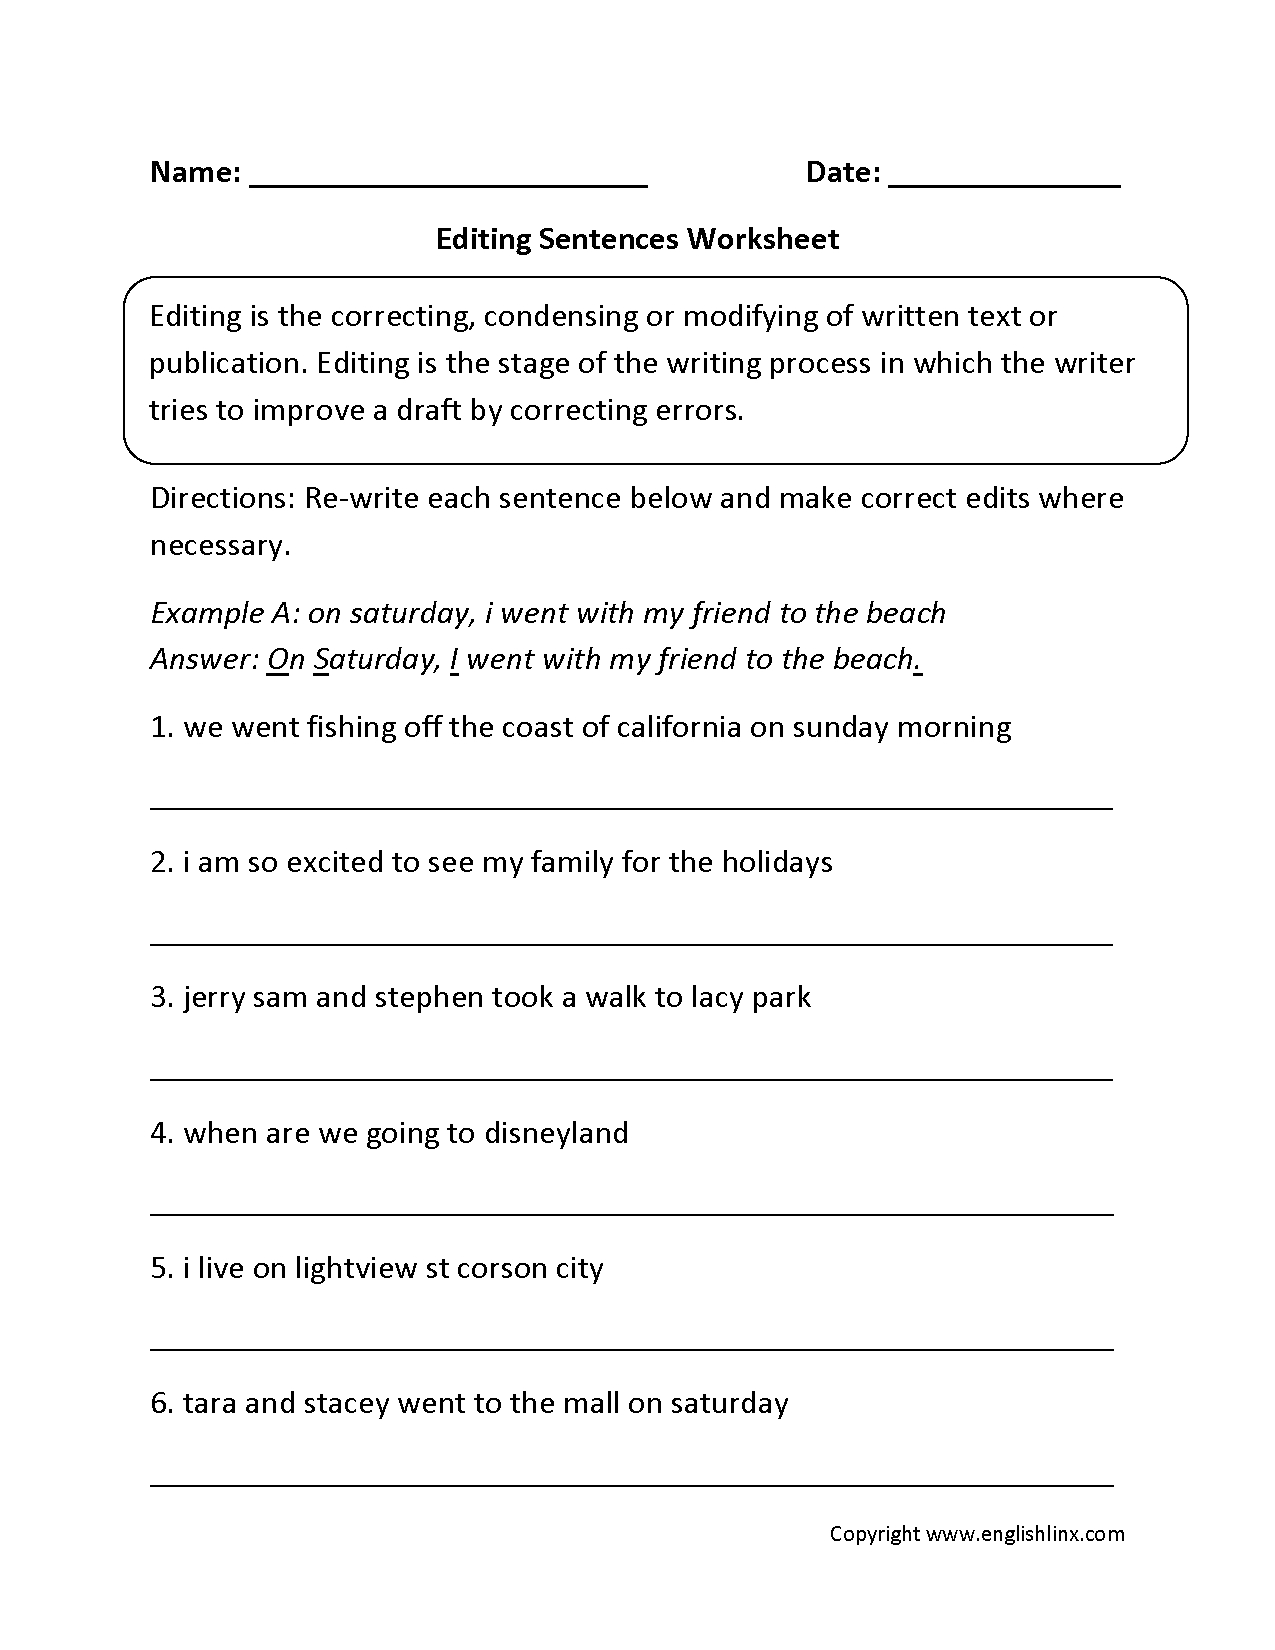 Writing Worksheets | Editing Worksheets | Printable Editing Worksheets